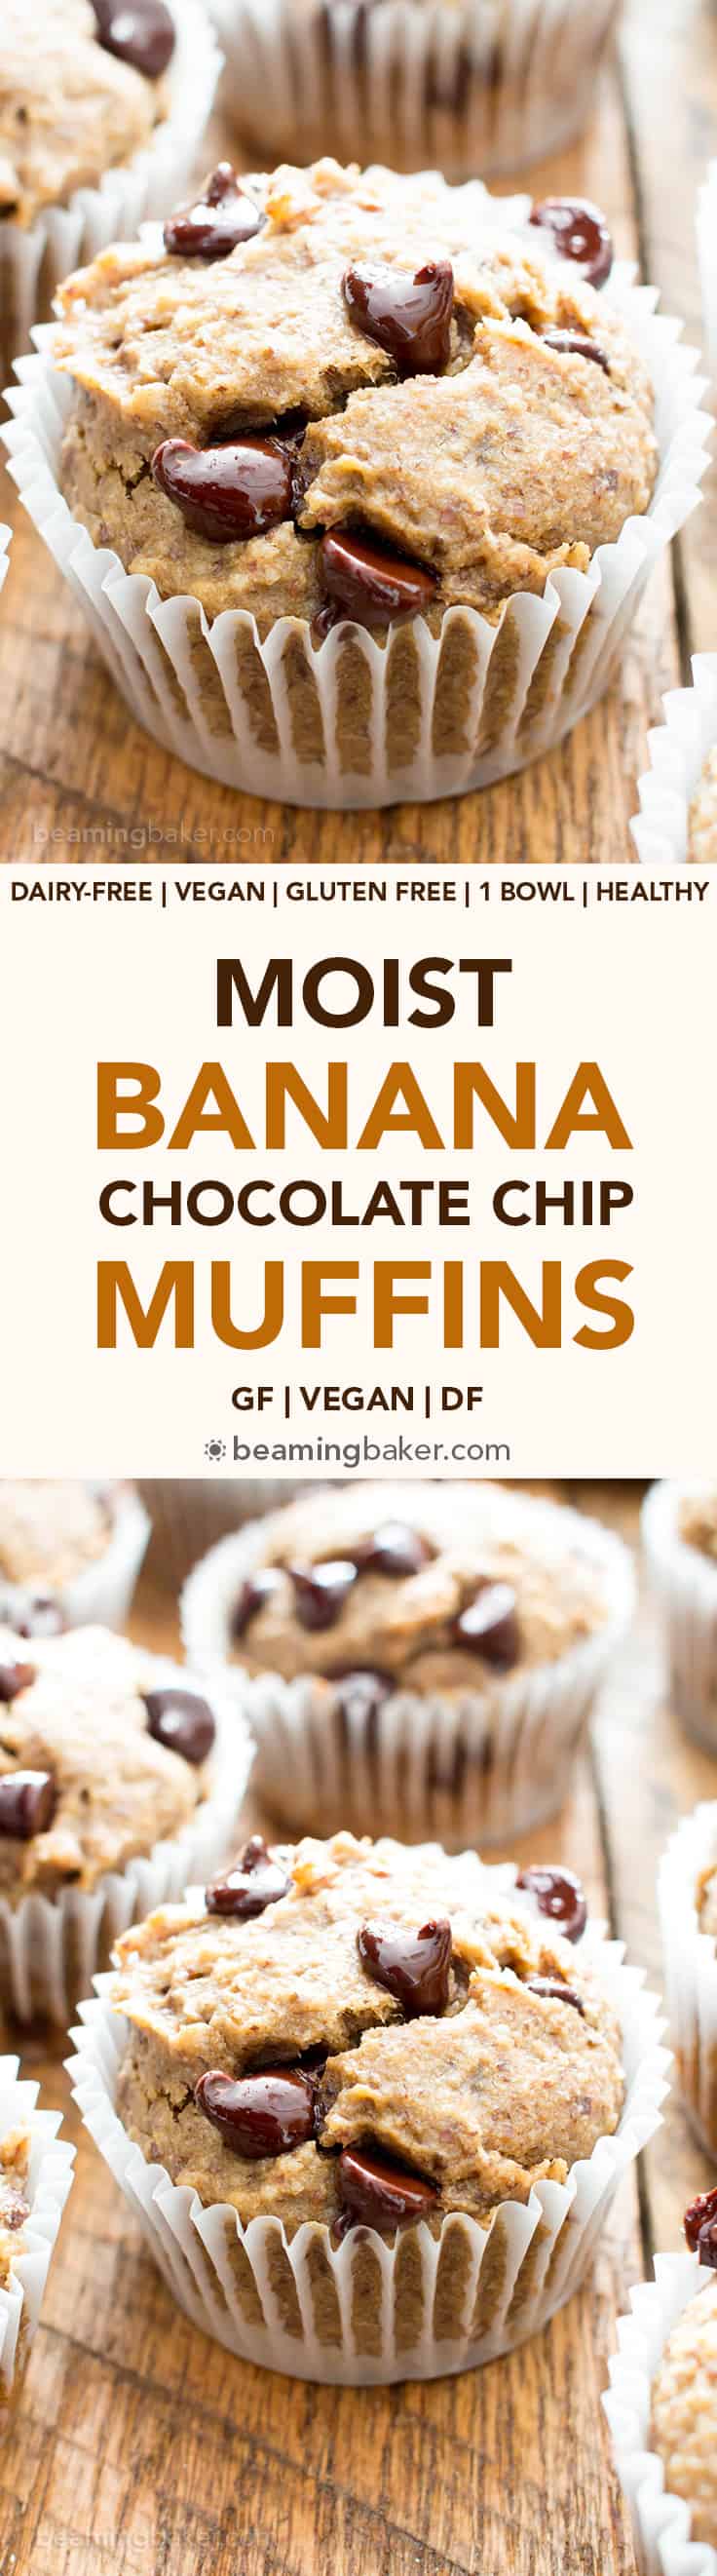 Moist Banana Chocolate Chip Muffins (V, GF): a one bowl recipe for perfectly moist banana muffins bursting with chocolate chips! #Vegan #GlutenFree #DairyFree #Breakfast #Dessert | Recipe on BeamingBaker.com